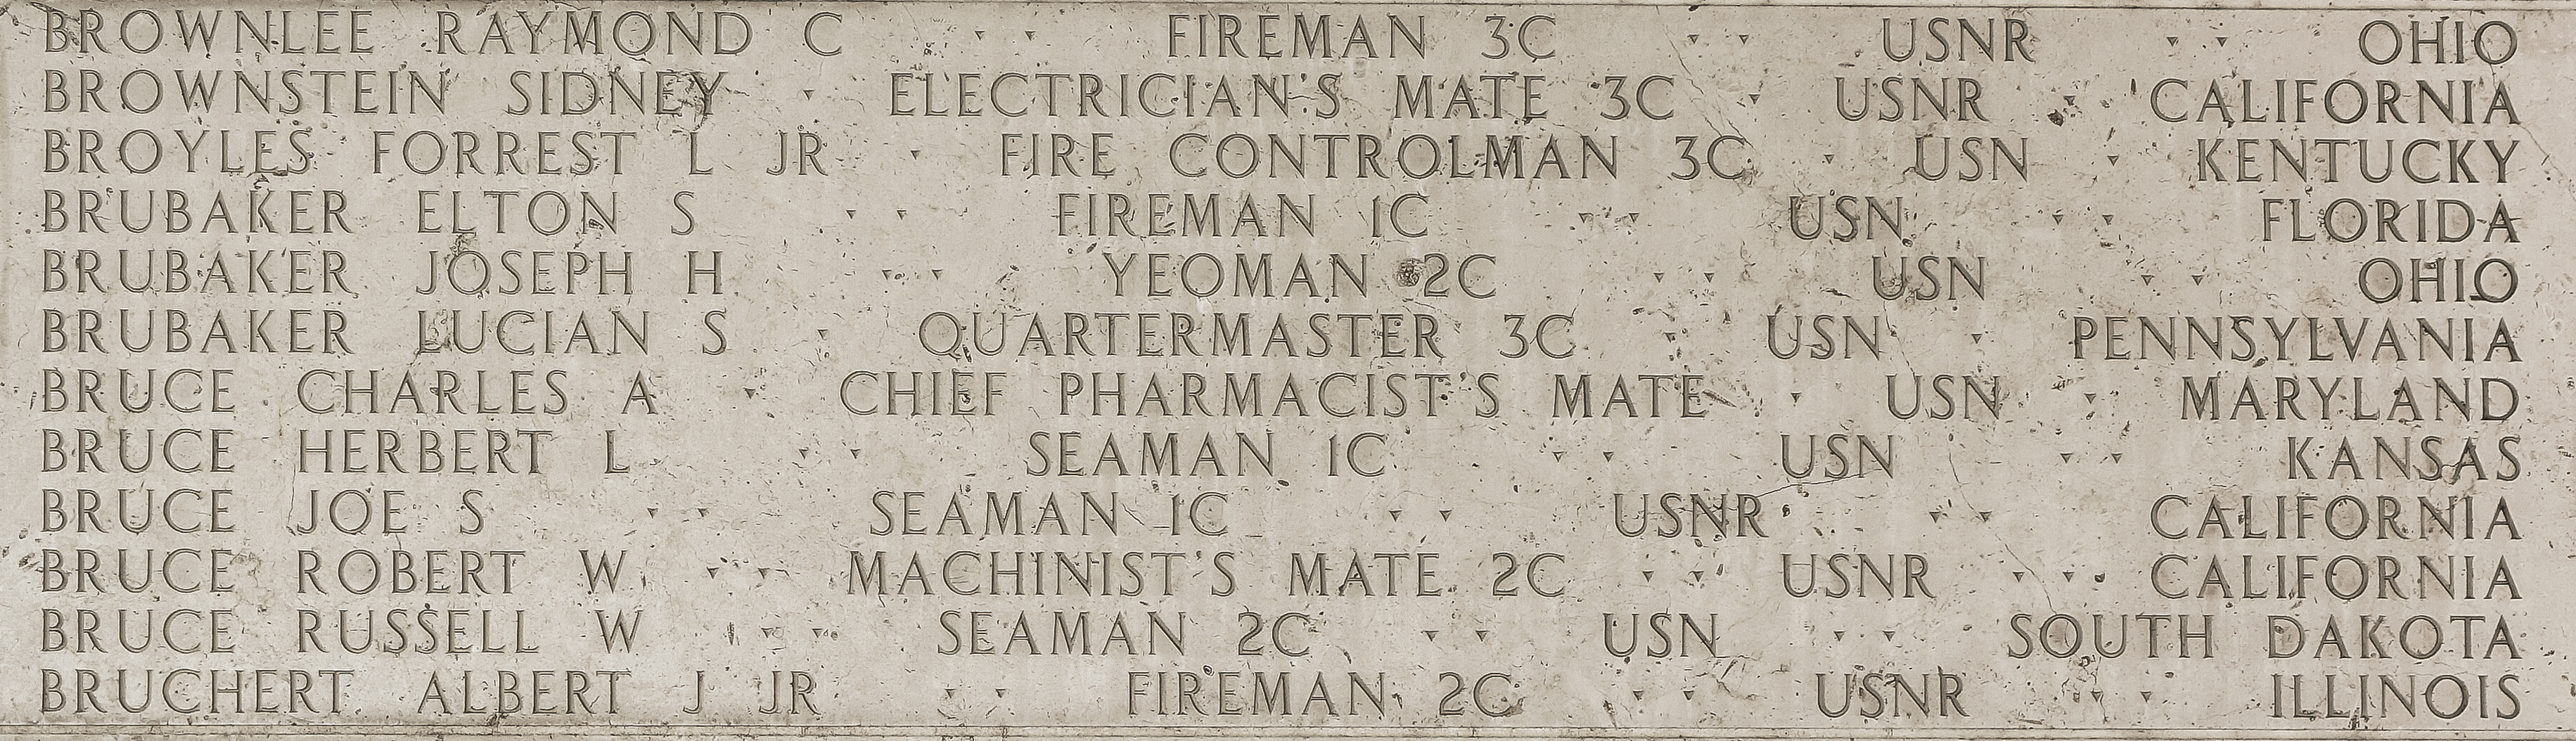 Forrest L. Broyles, Fire Controlman Third Class